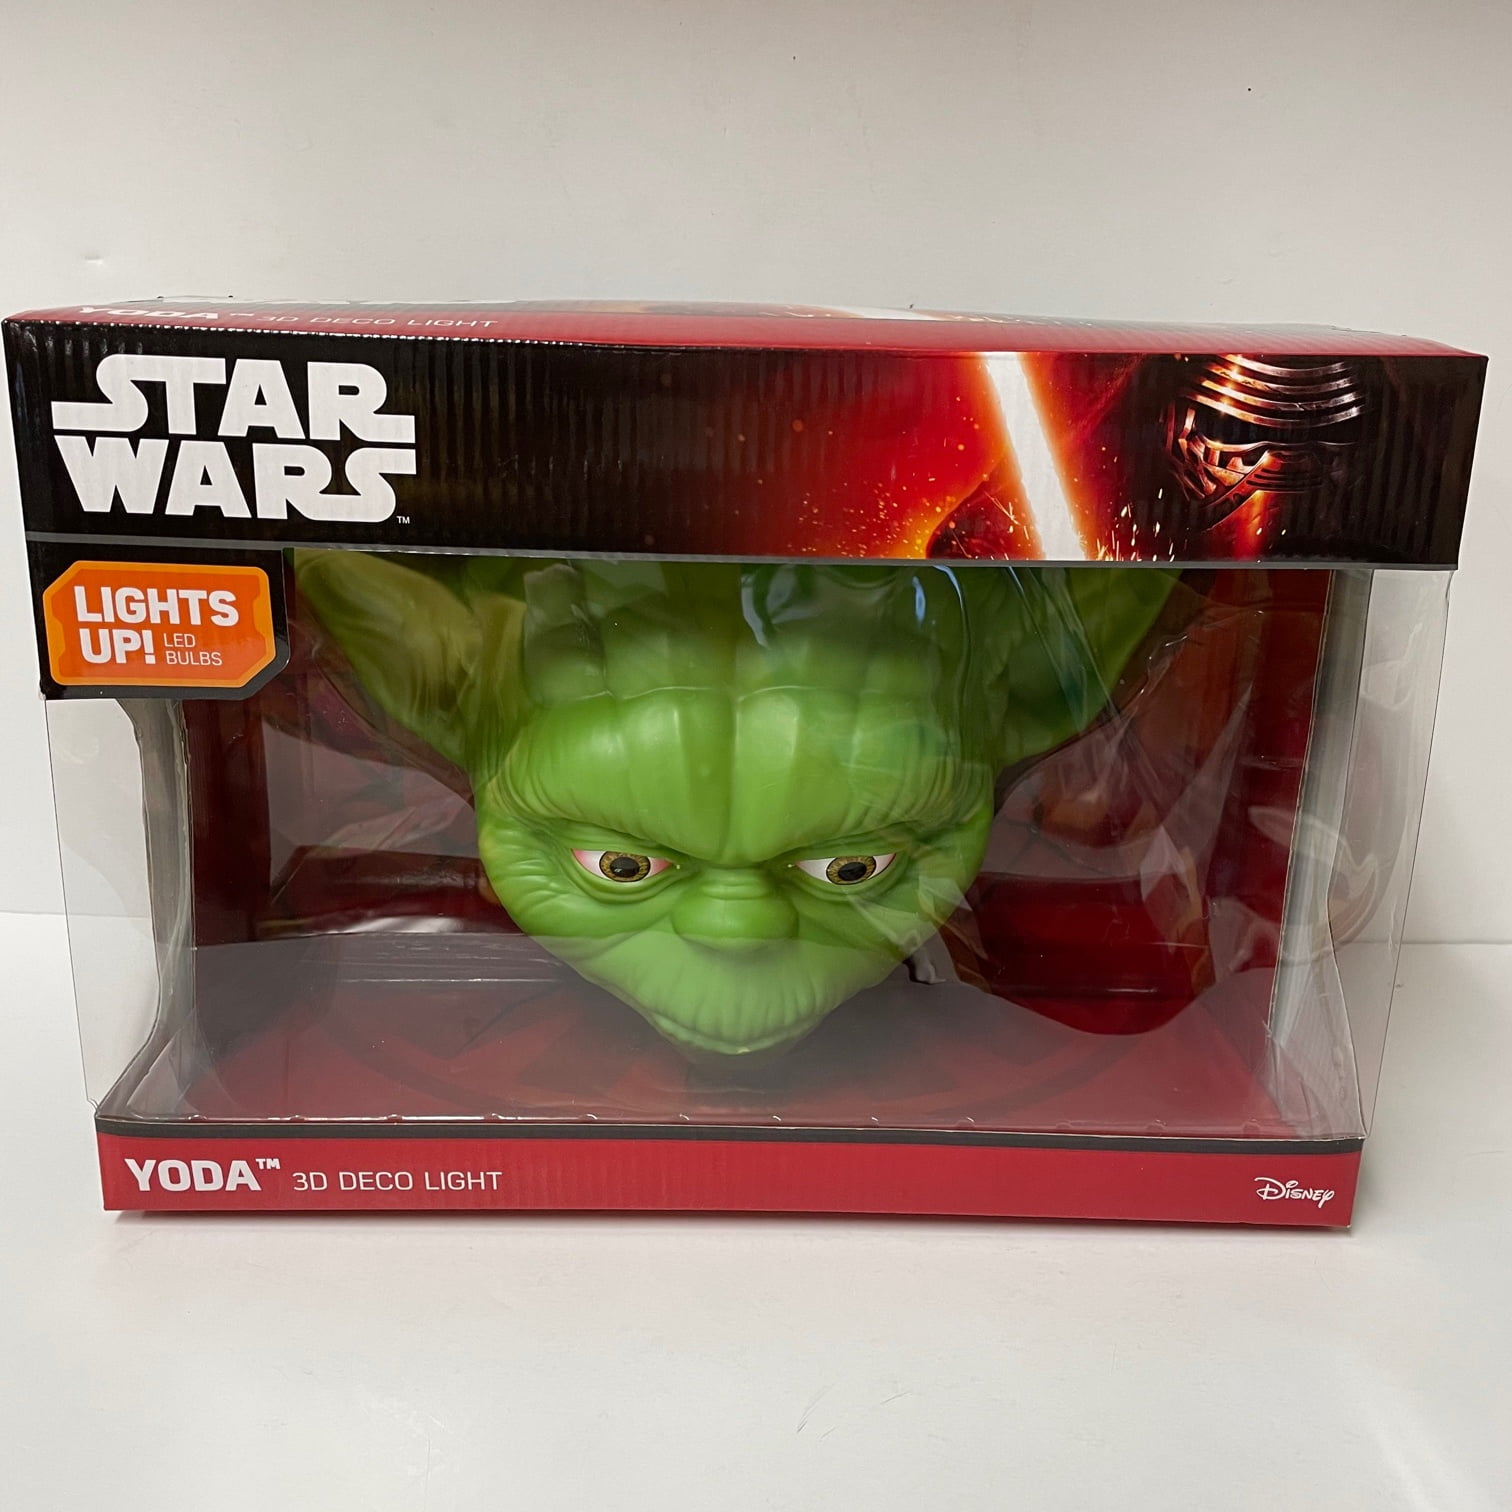 Star Wars Yoda 3D Deco Light 